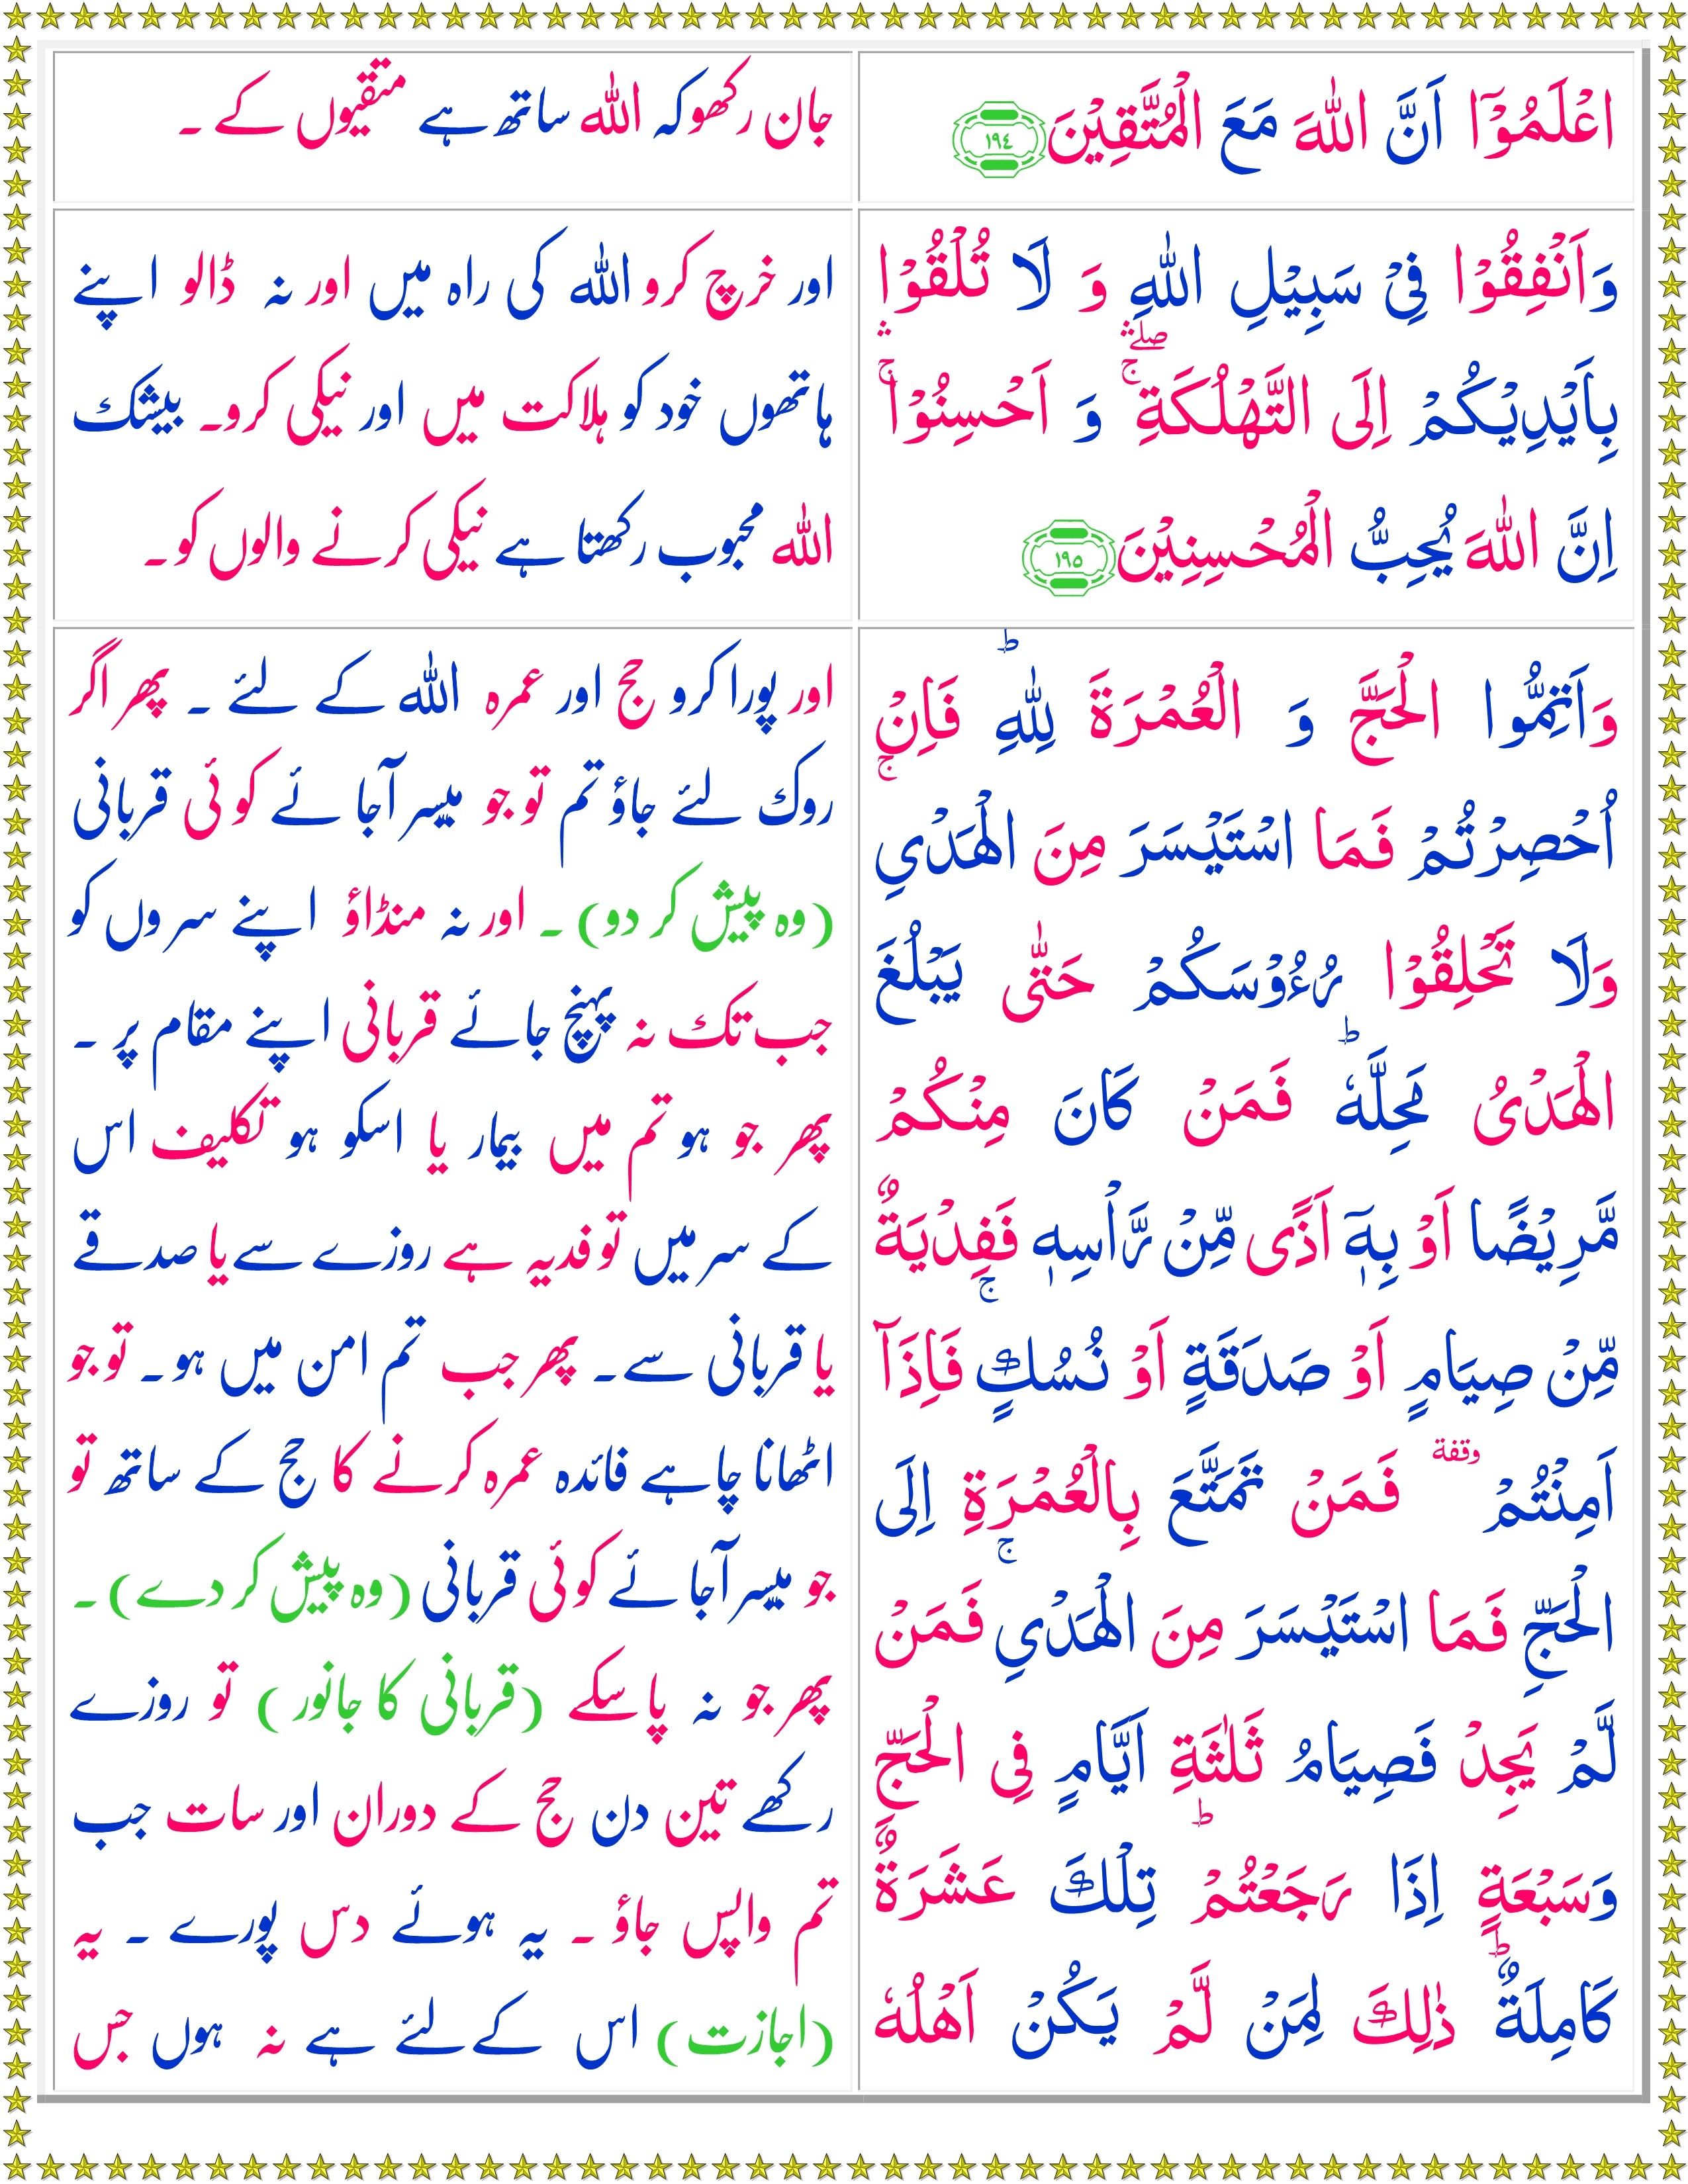 Surah Al Baqarah Urdu Page 6 Of 10 Quran O Sunnat